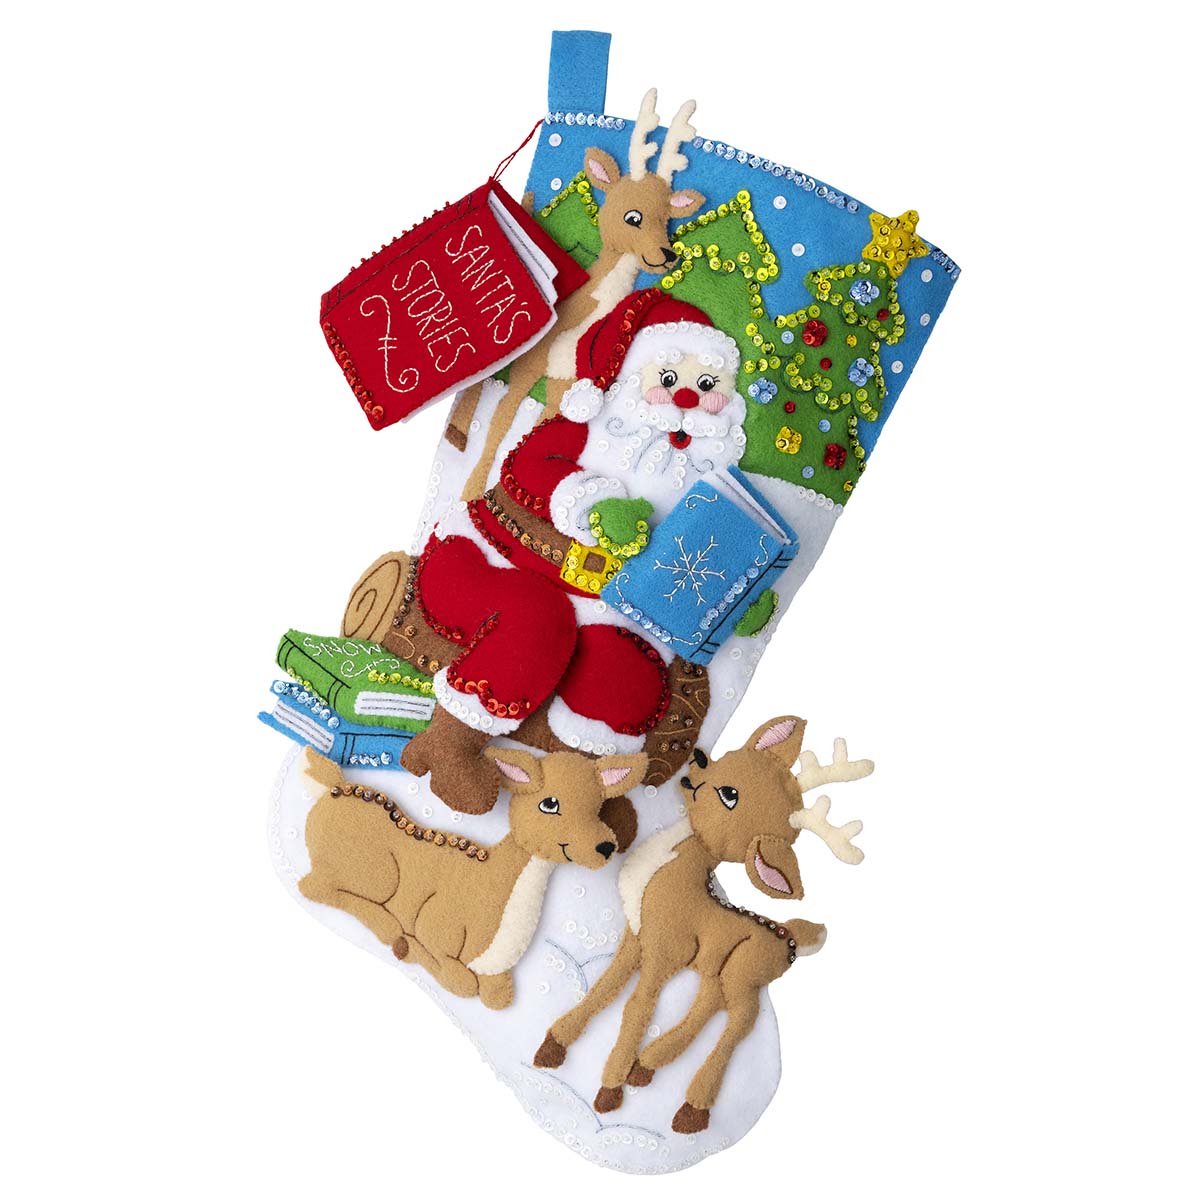 Bucilla Reindeer Santa Christmas Stocking Kit